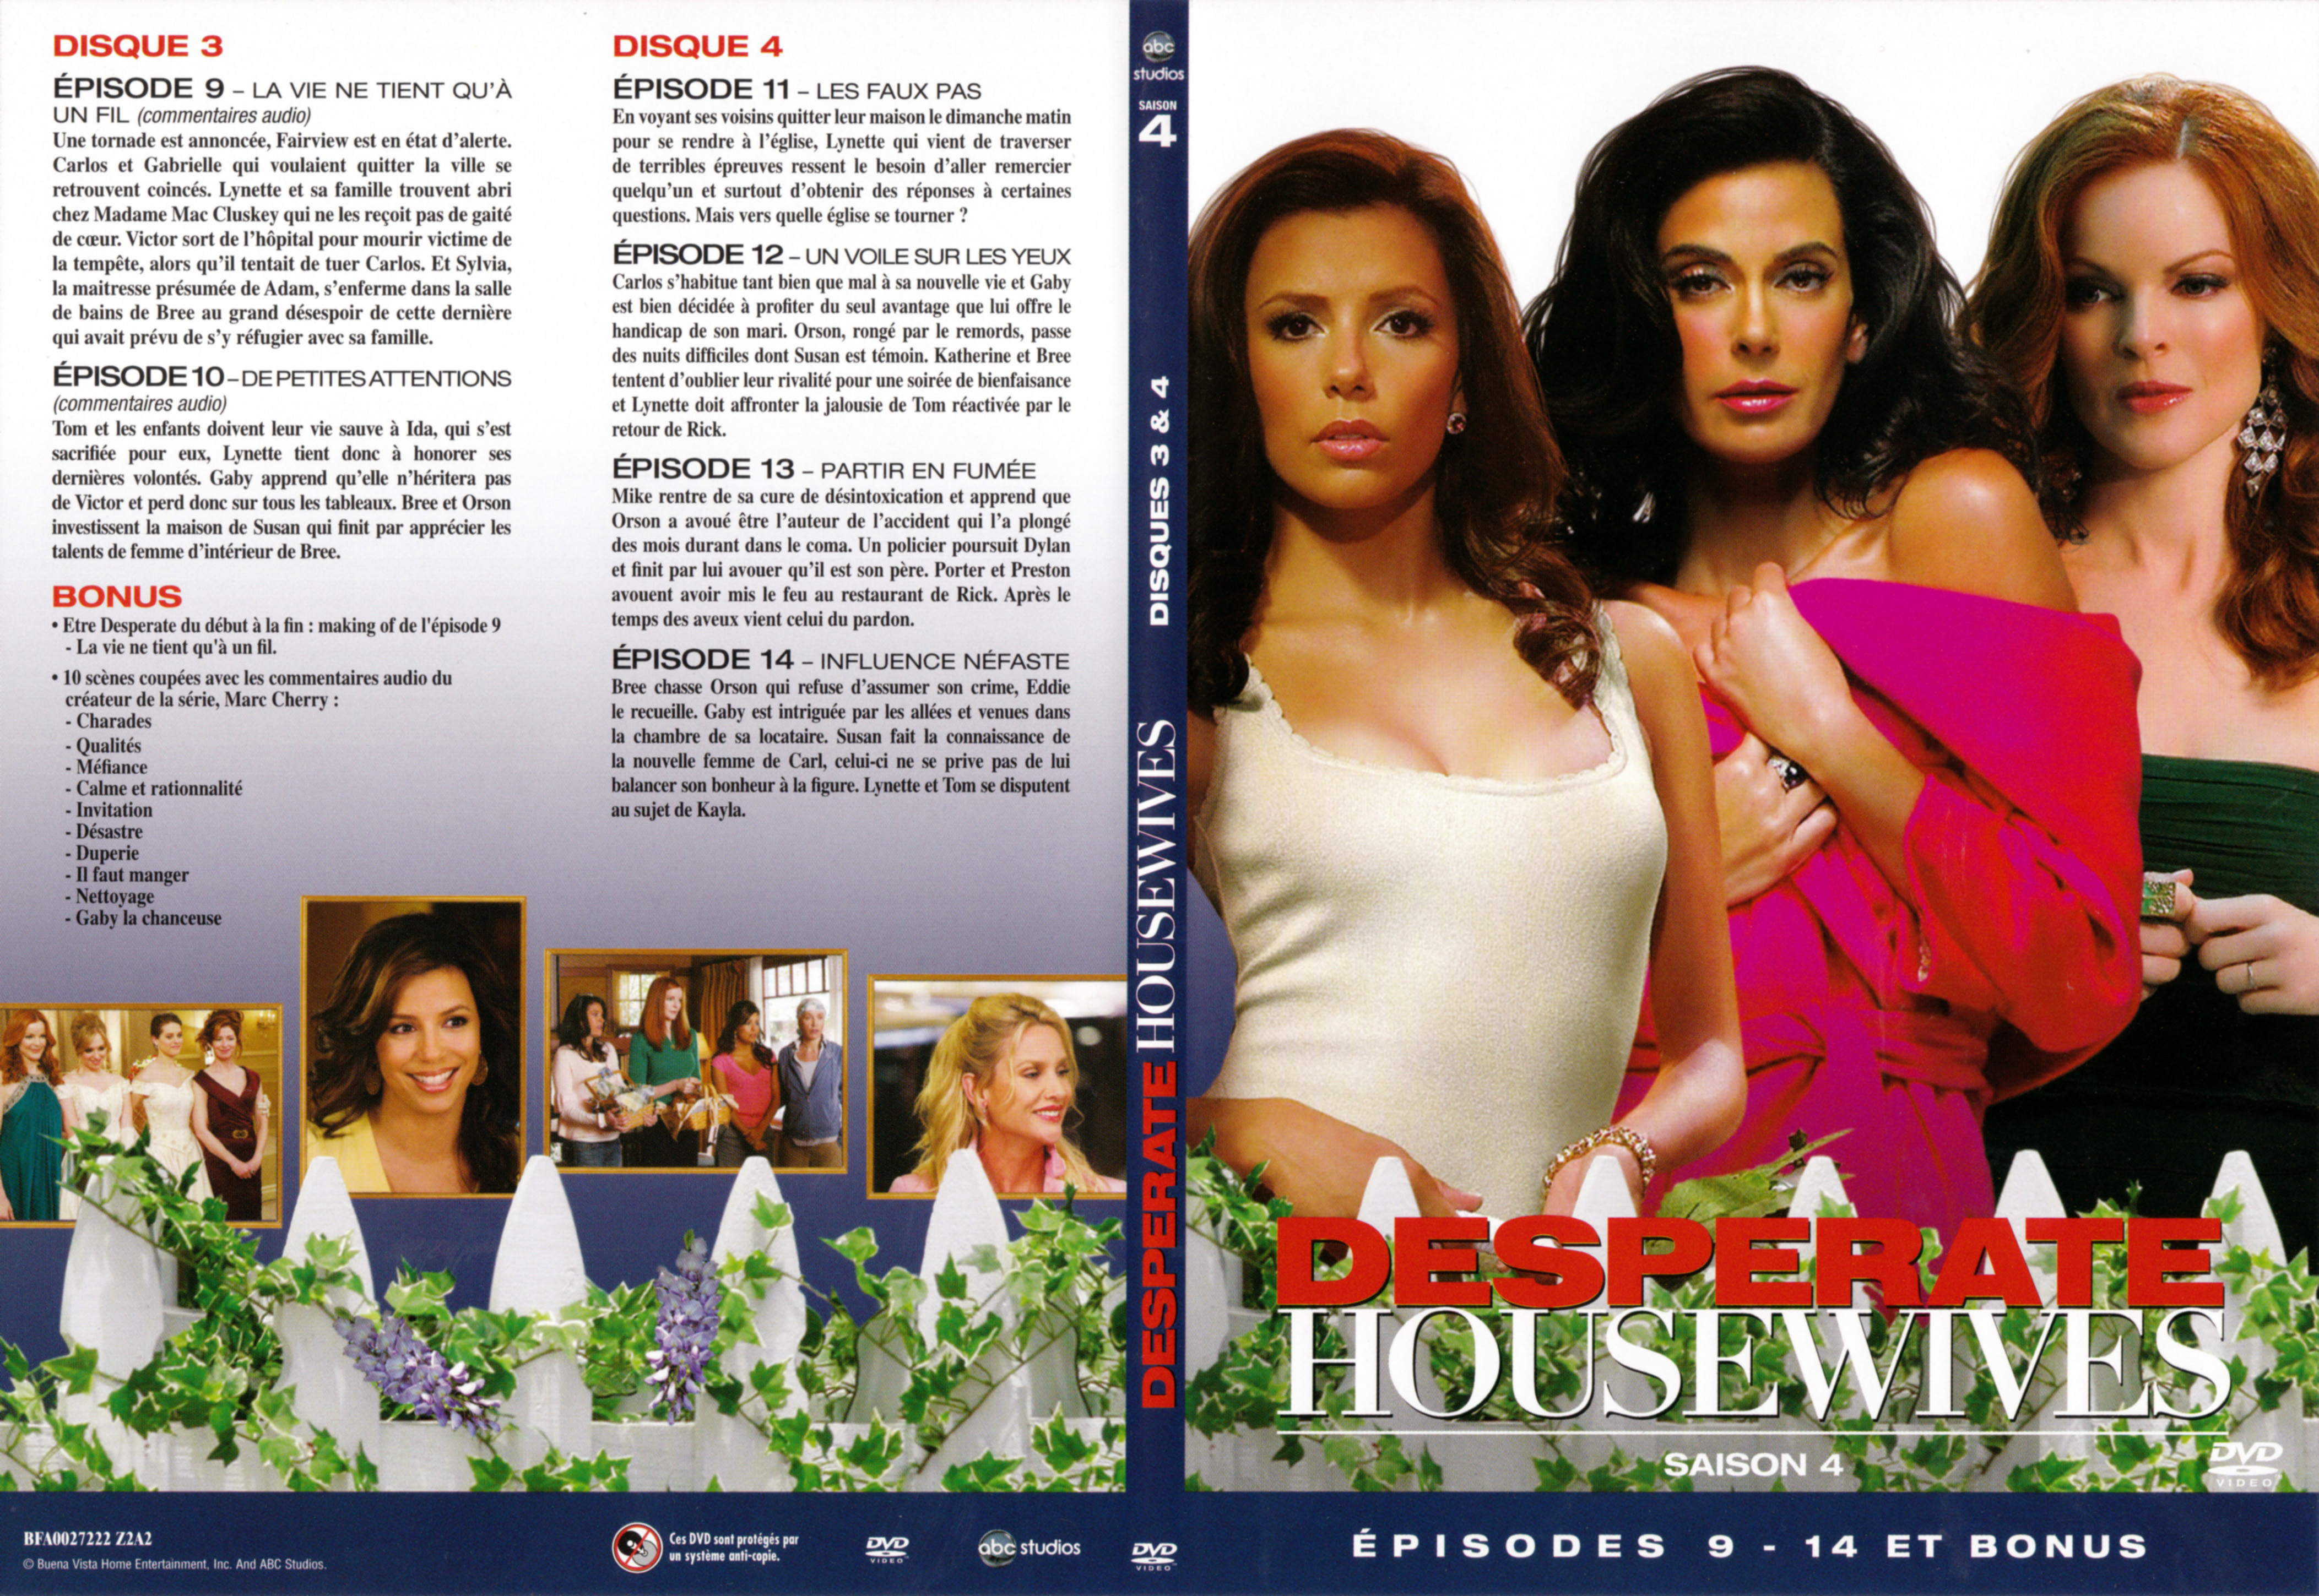 Jaquette DVD Desperate Housewives saison 4 DVD 2